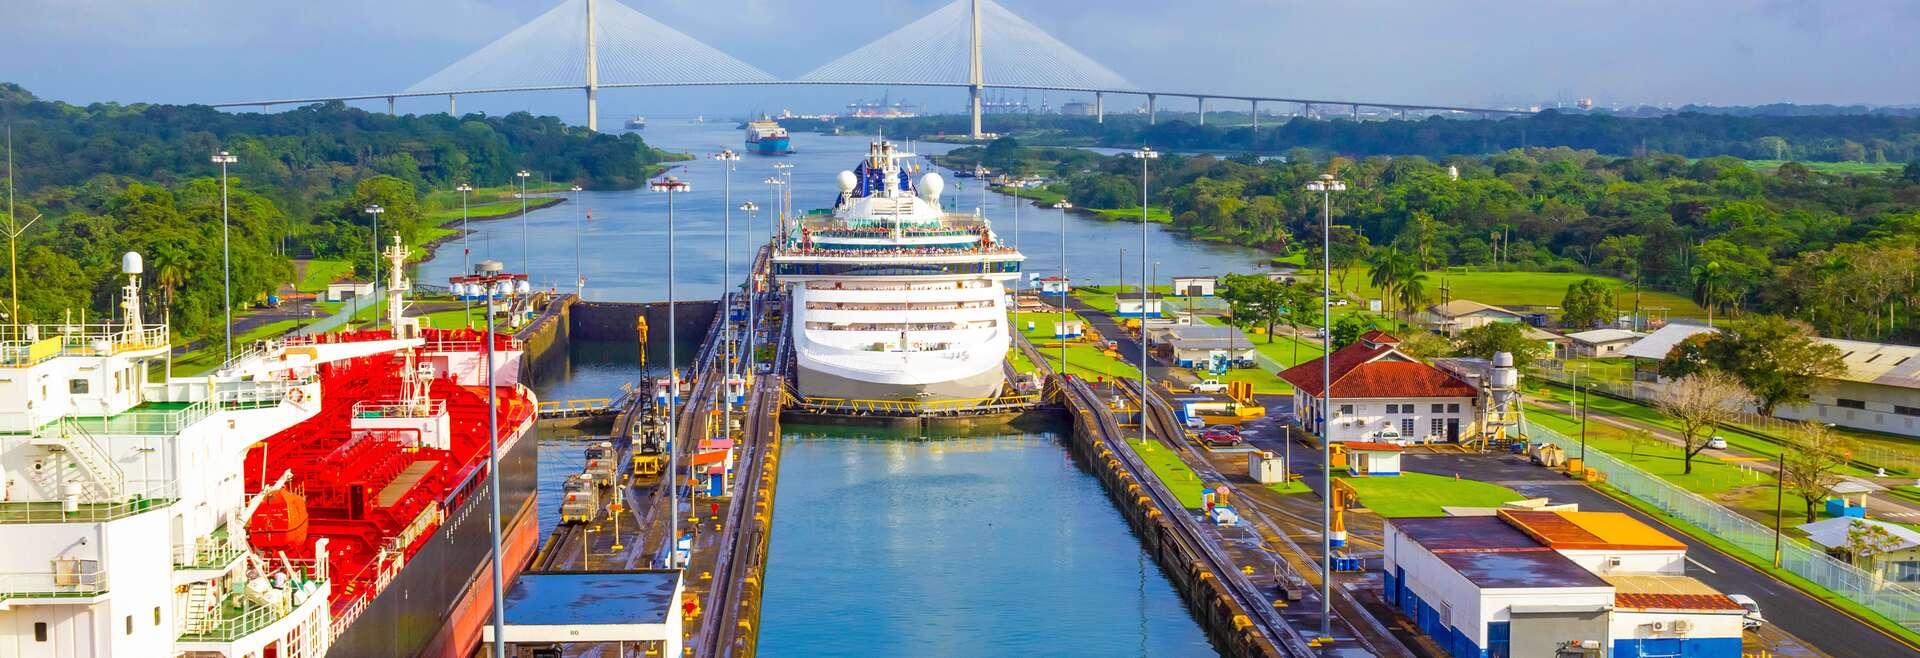 Sprachaufenthalt Panama, Panama City - Panamakanal Durchquerung